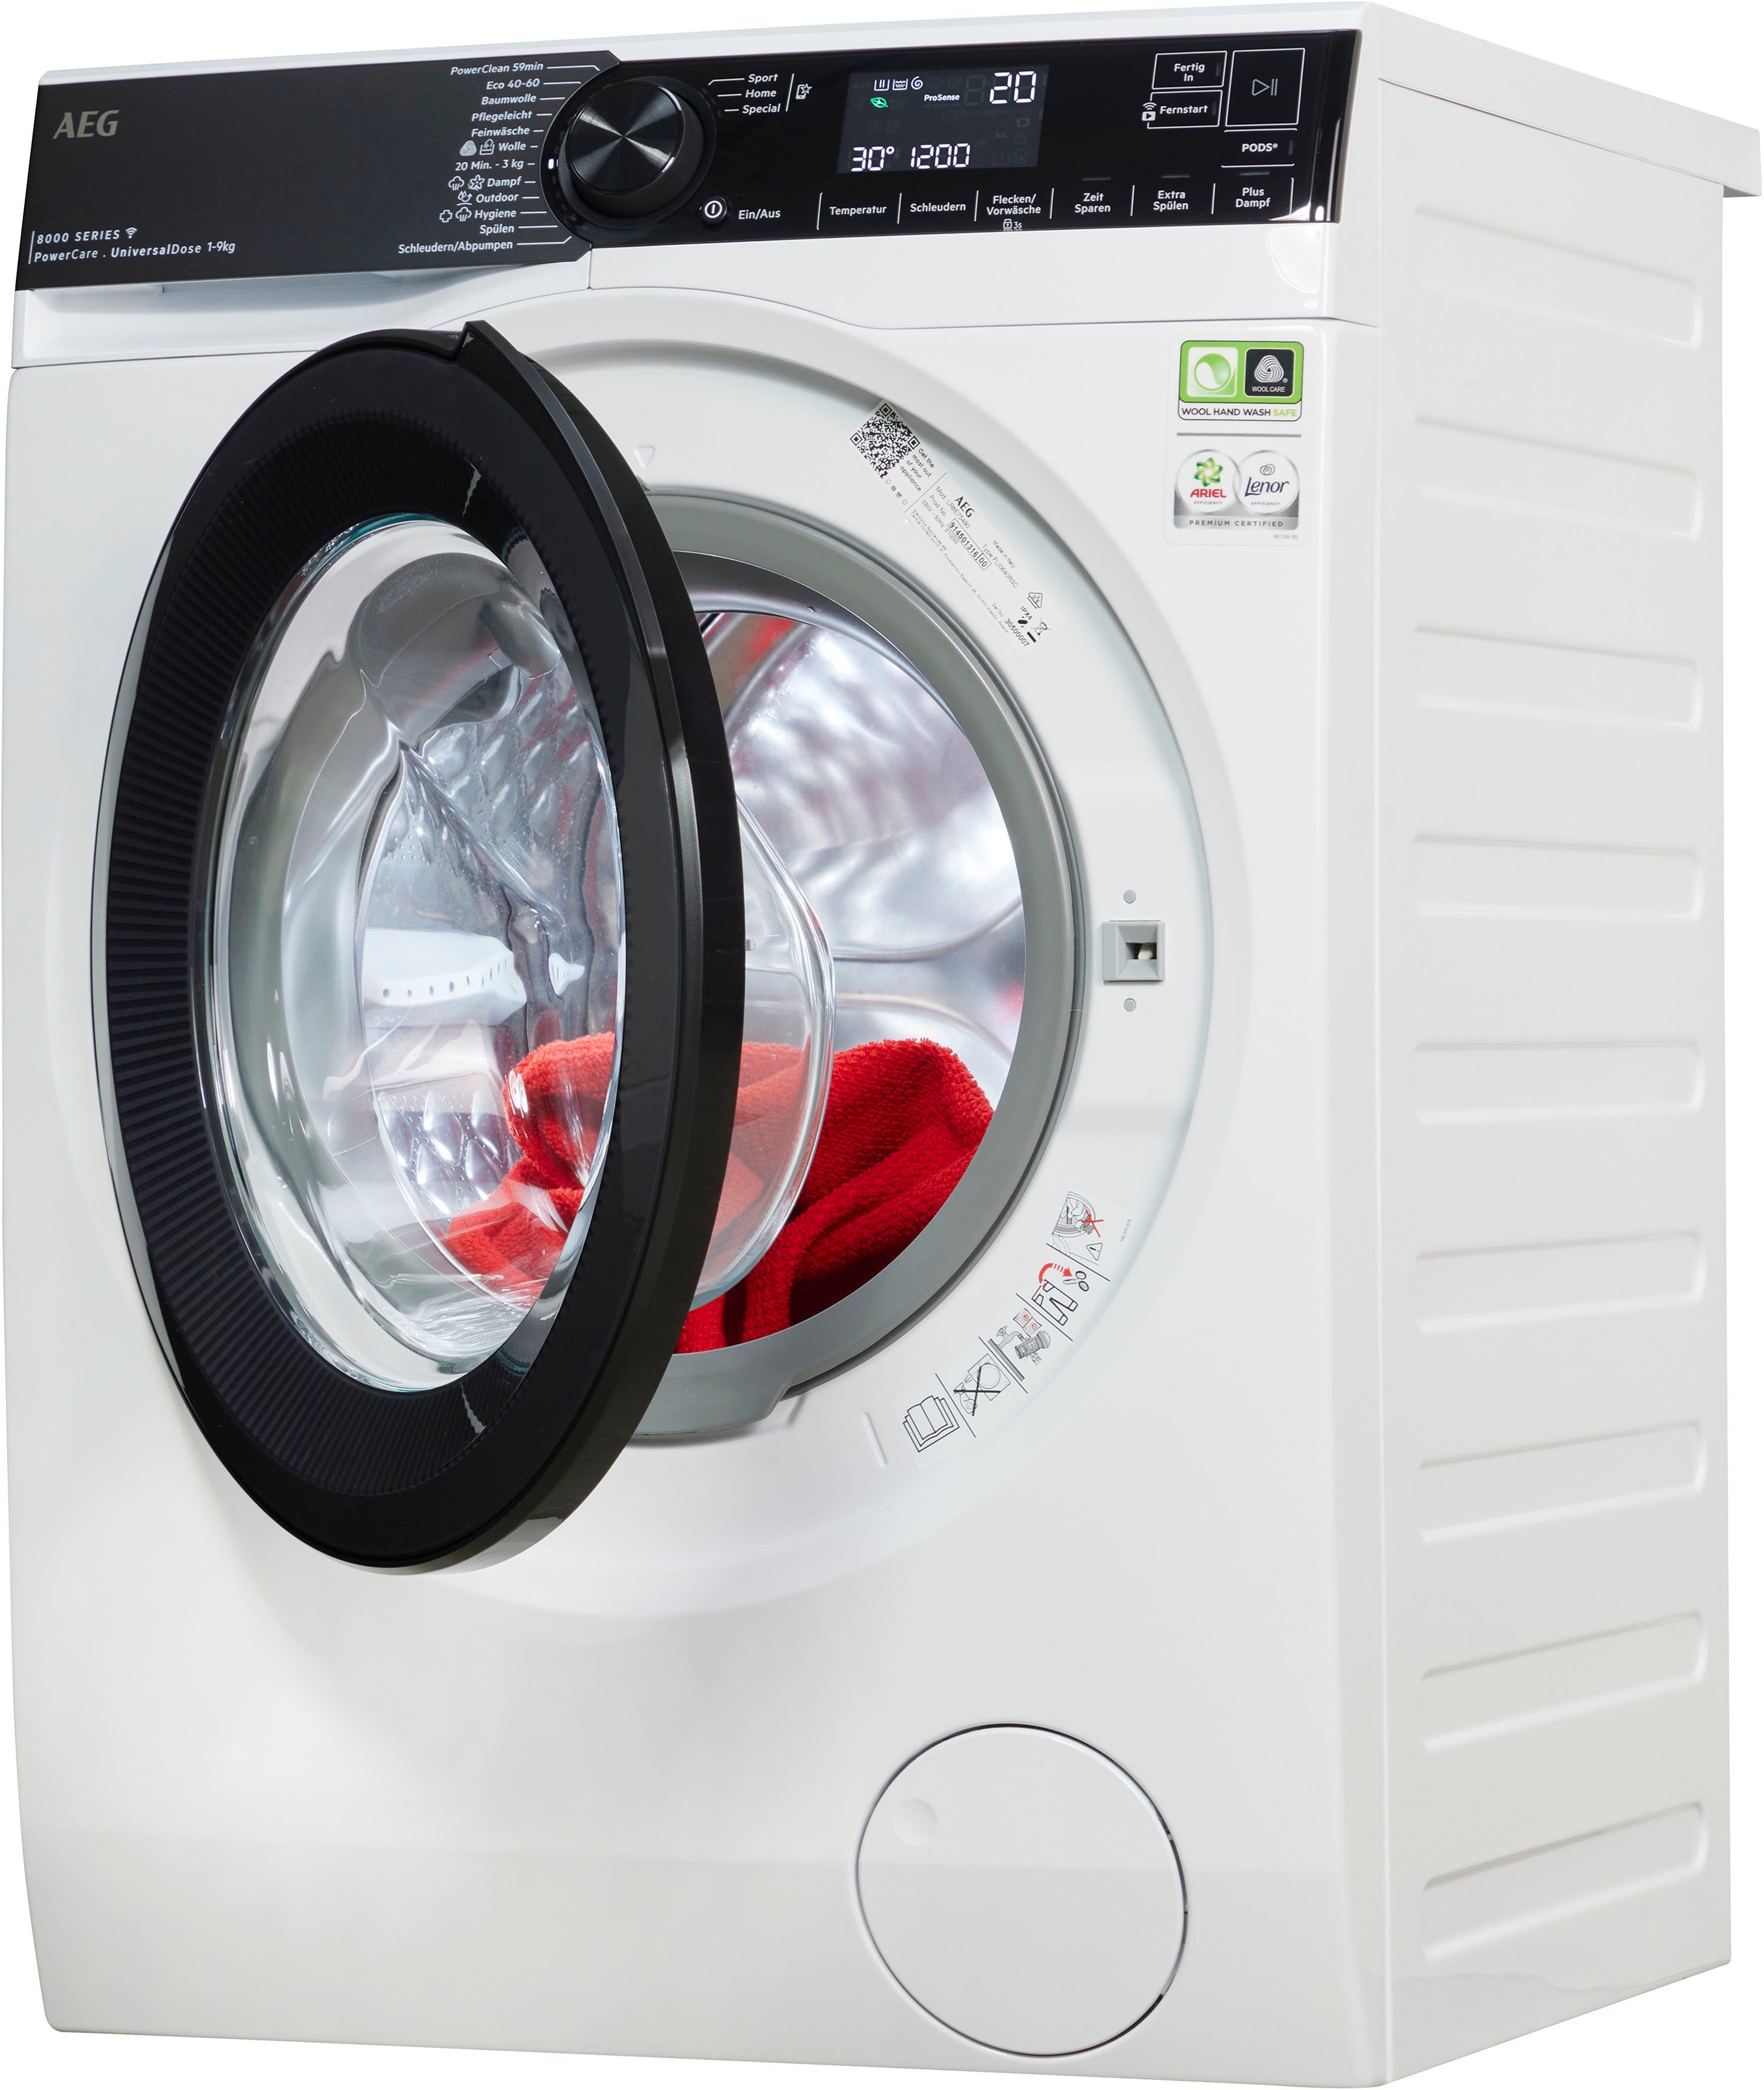 AEG Waschmaschine 8000 PowerCare LR8E75490, PowerClean bei - U/min, Min. °C & in 59 Fleckenentfernung 9 1400 nur kg, Wifi 30